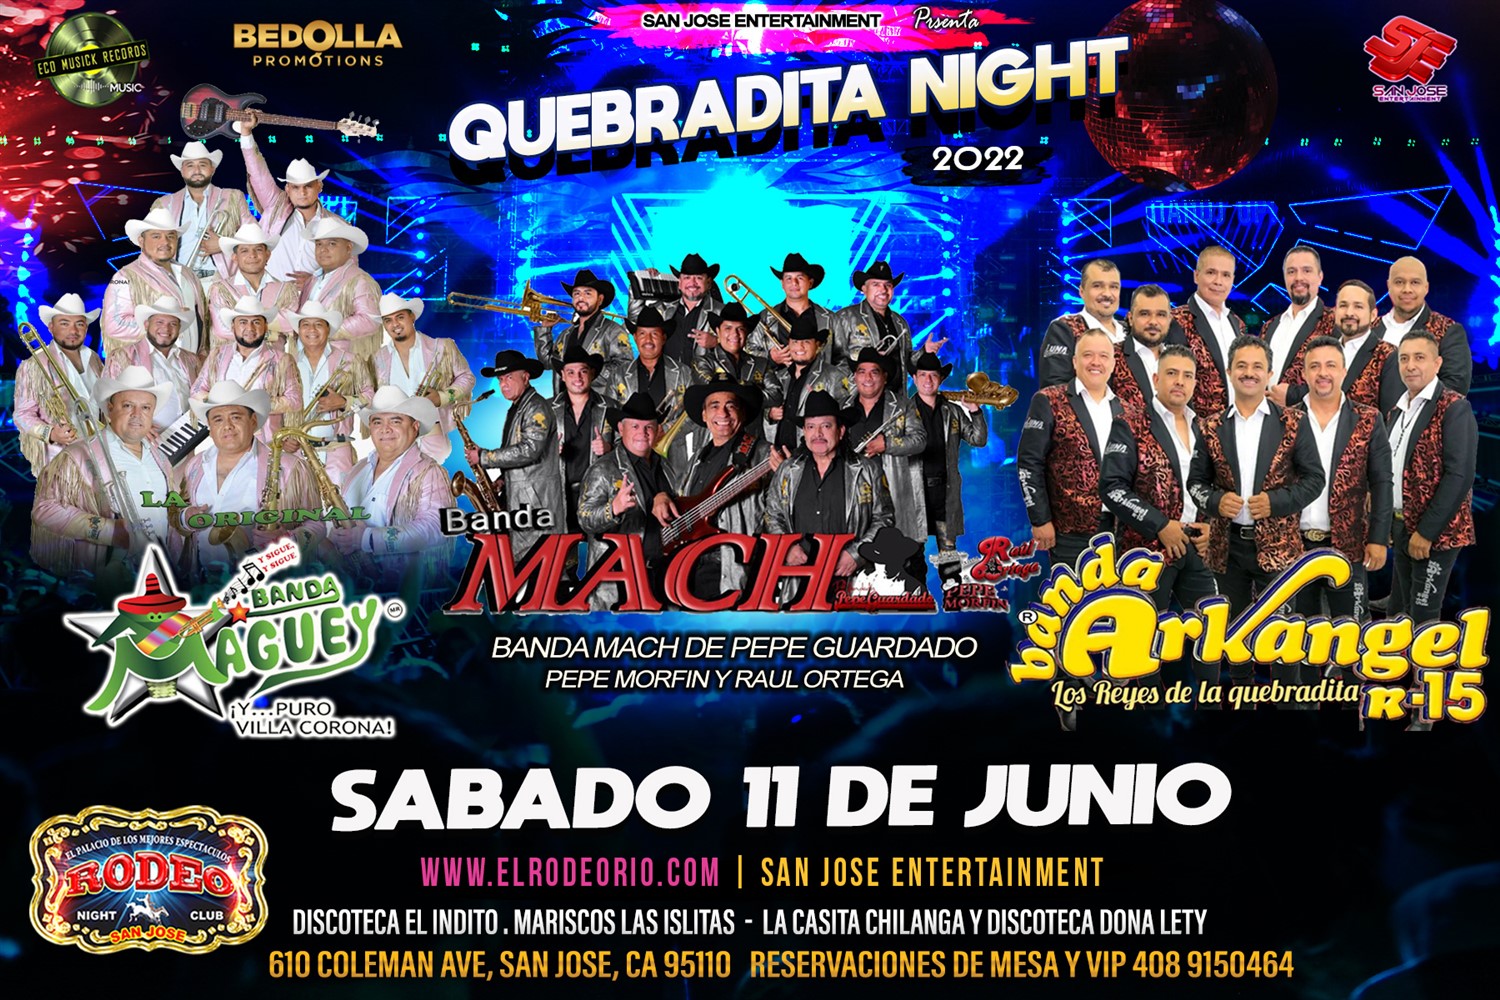 Banda Maguey,Banda Arkangel R15 y Banda Mach Quebradita Night 2022 on Jun 11, 21:00@Club Rodeo - Buy tickets and Get information on elrodeorio.com sanjoseentertainment